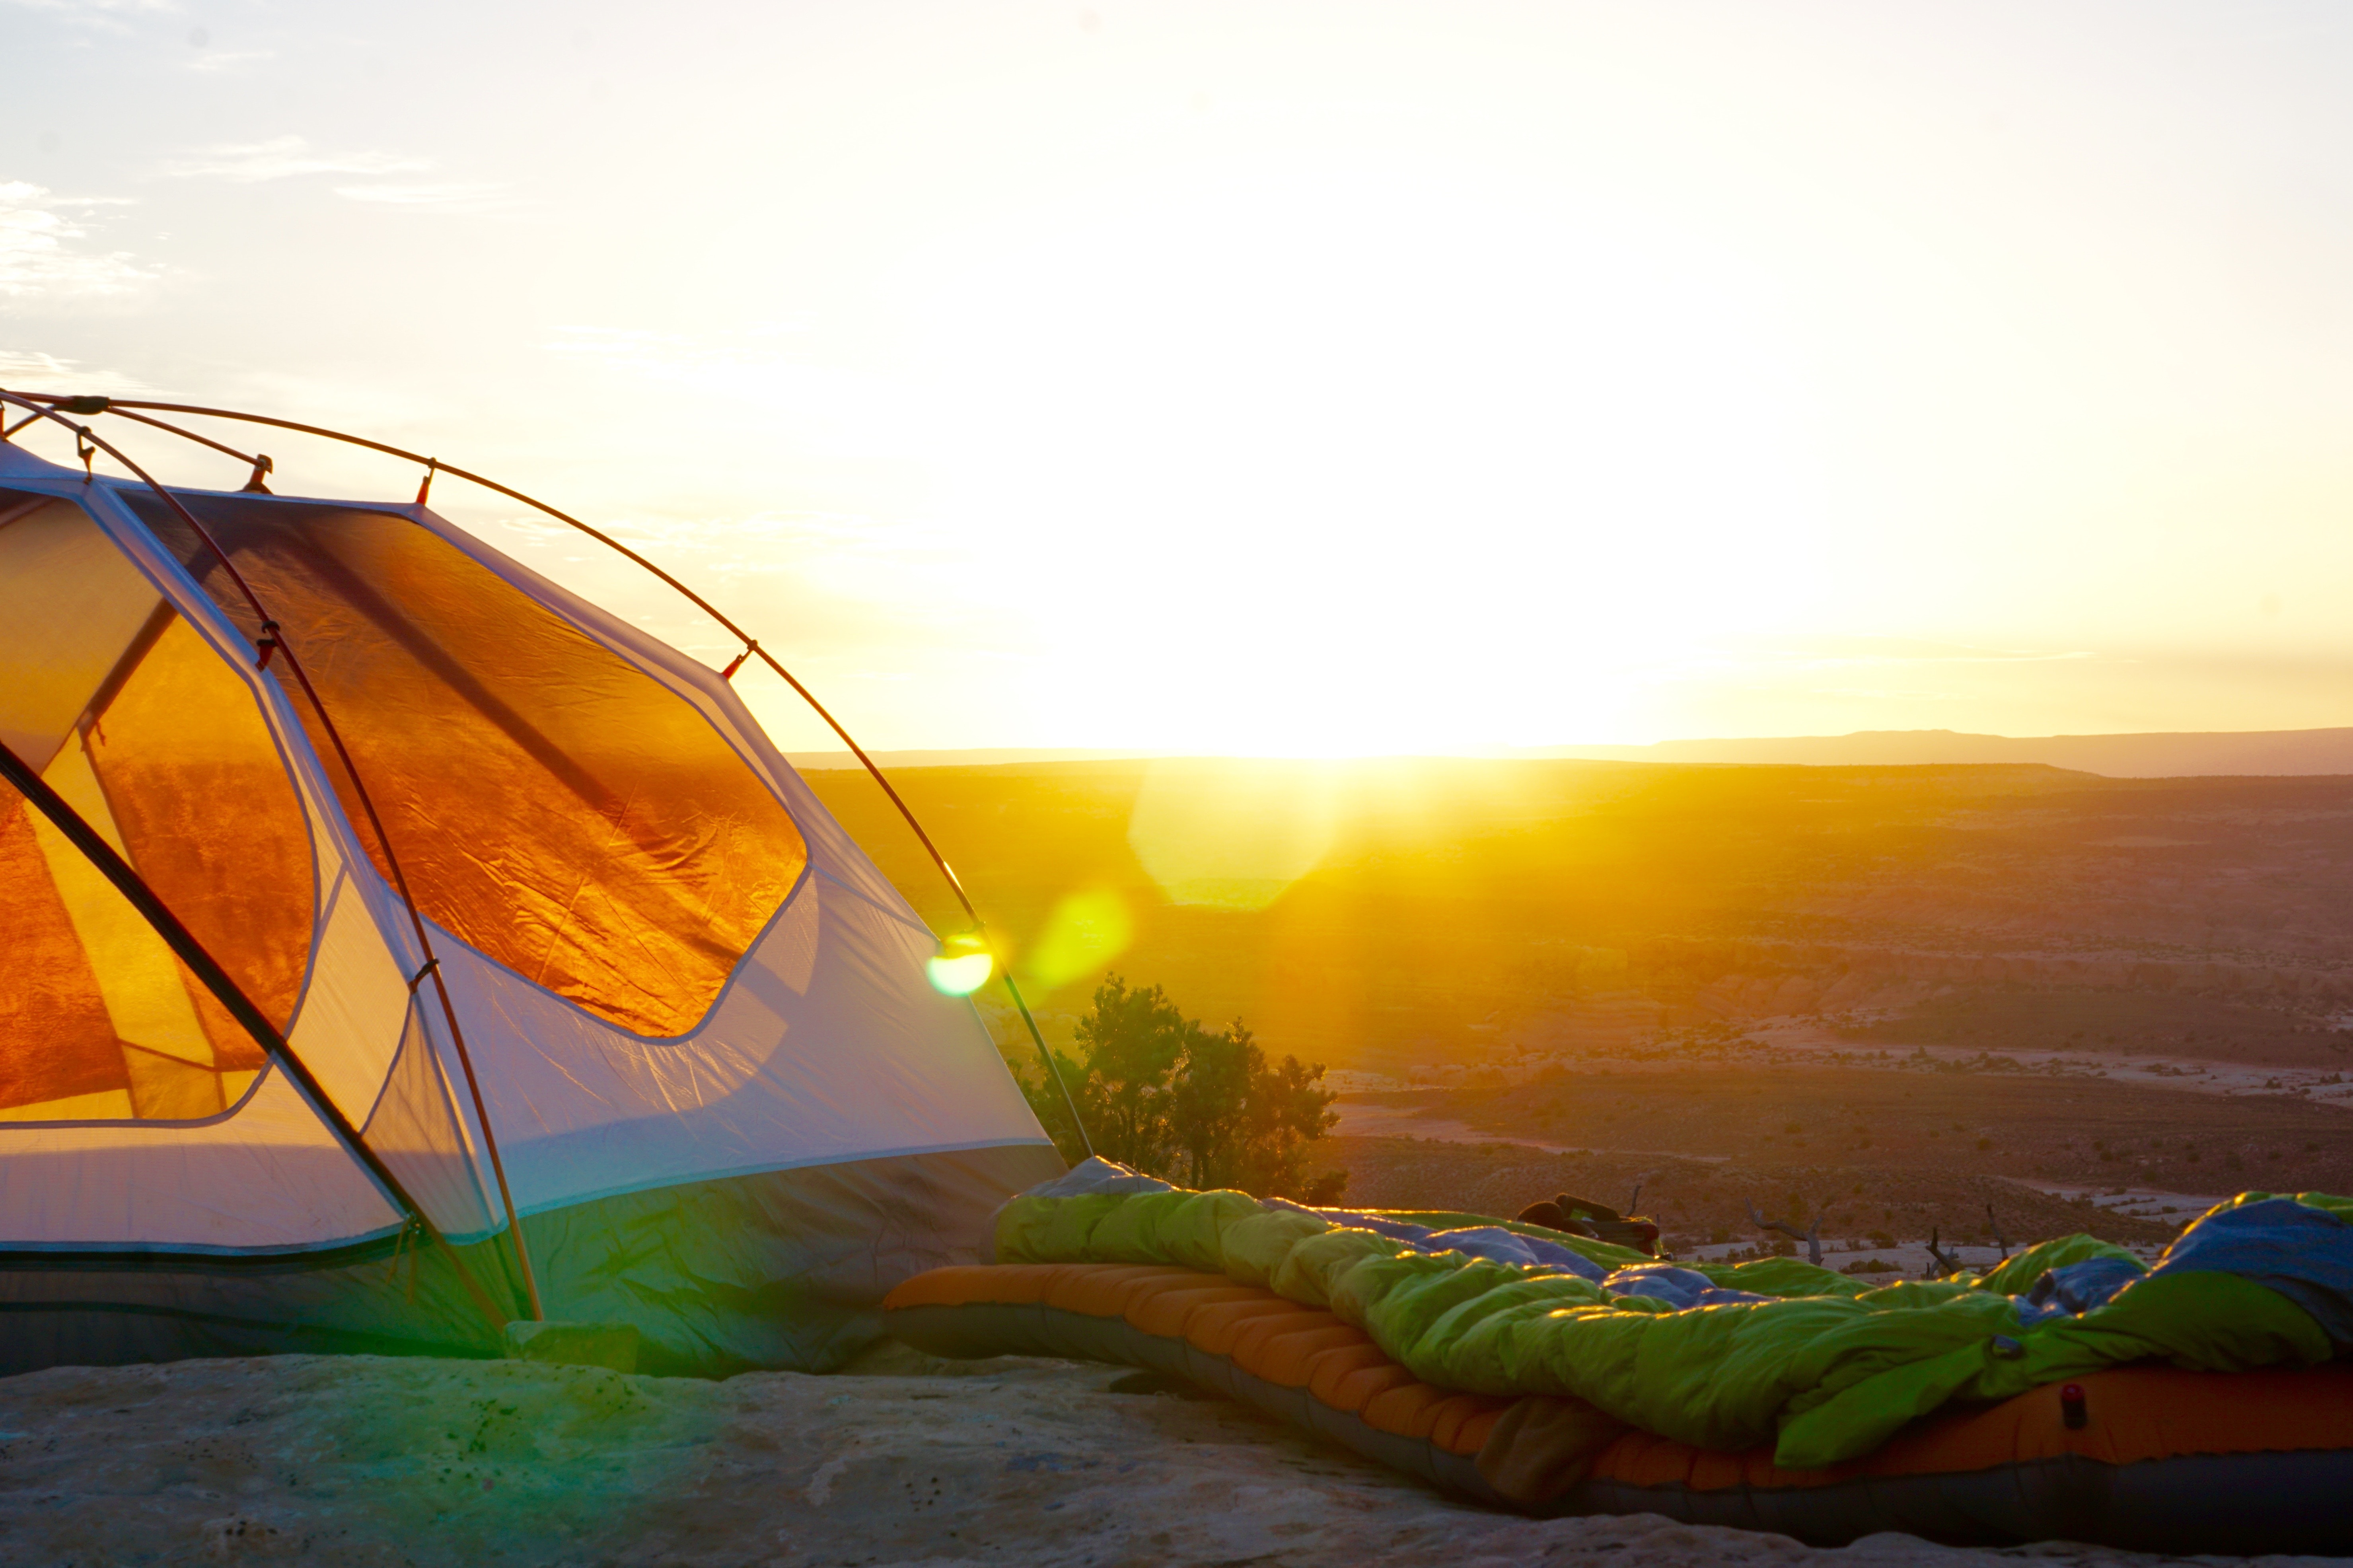 The 7 Golden Rules of Etiquette for Camping, PTT Outdoor, jack sloop qelGaL2OLyE unsplash,